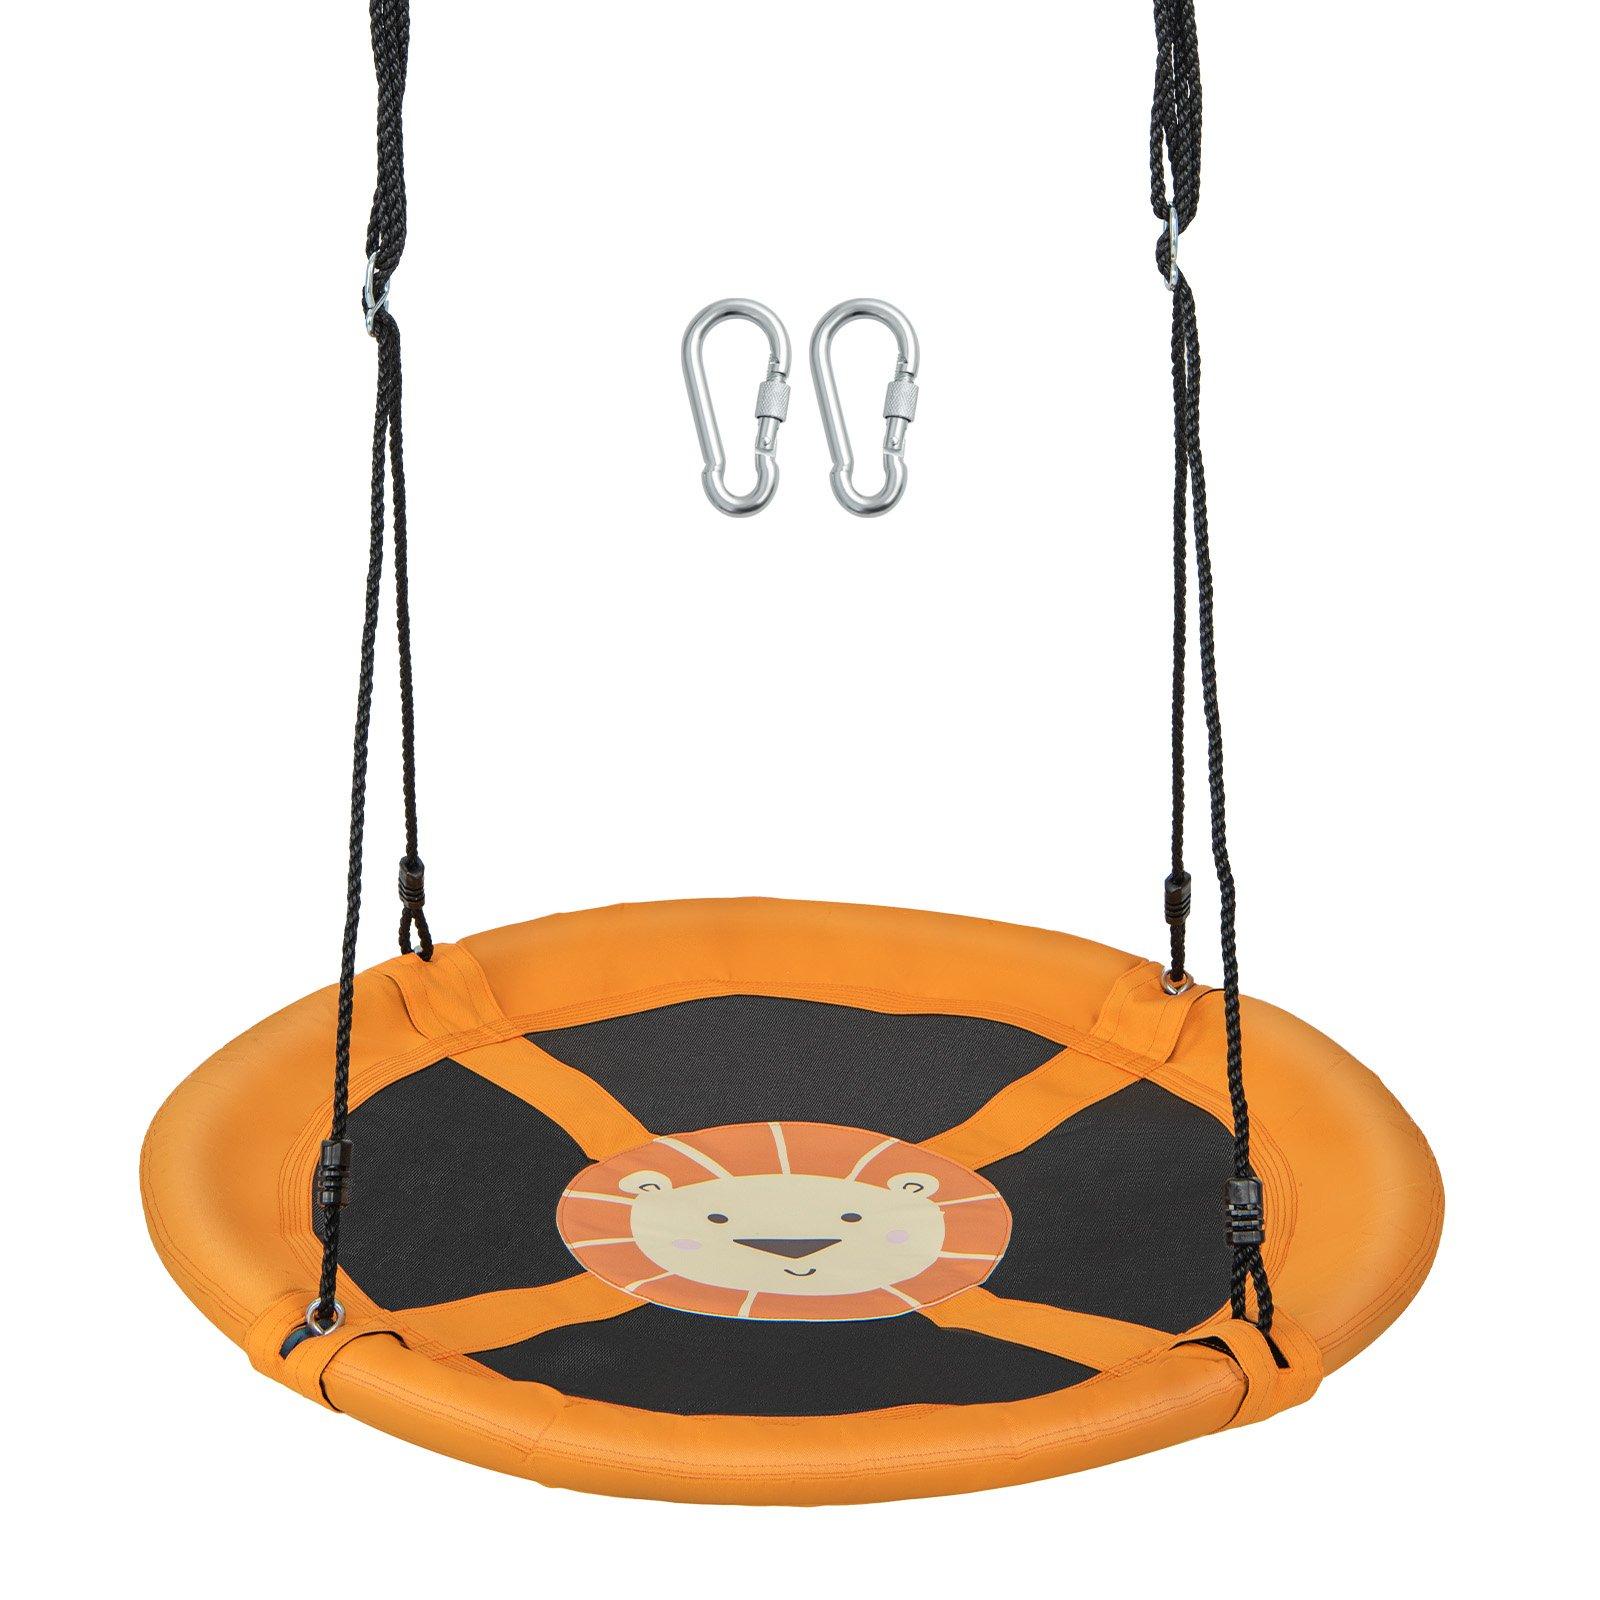 100cm Round Saucer Tree Swing w/ Adjustable Rope Saucer Tree Swing Flying Circle Swing Seat